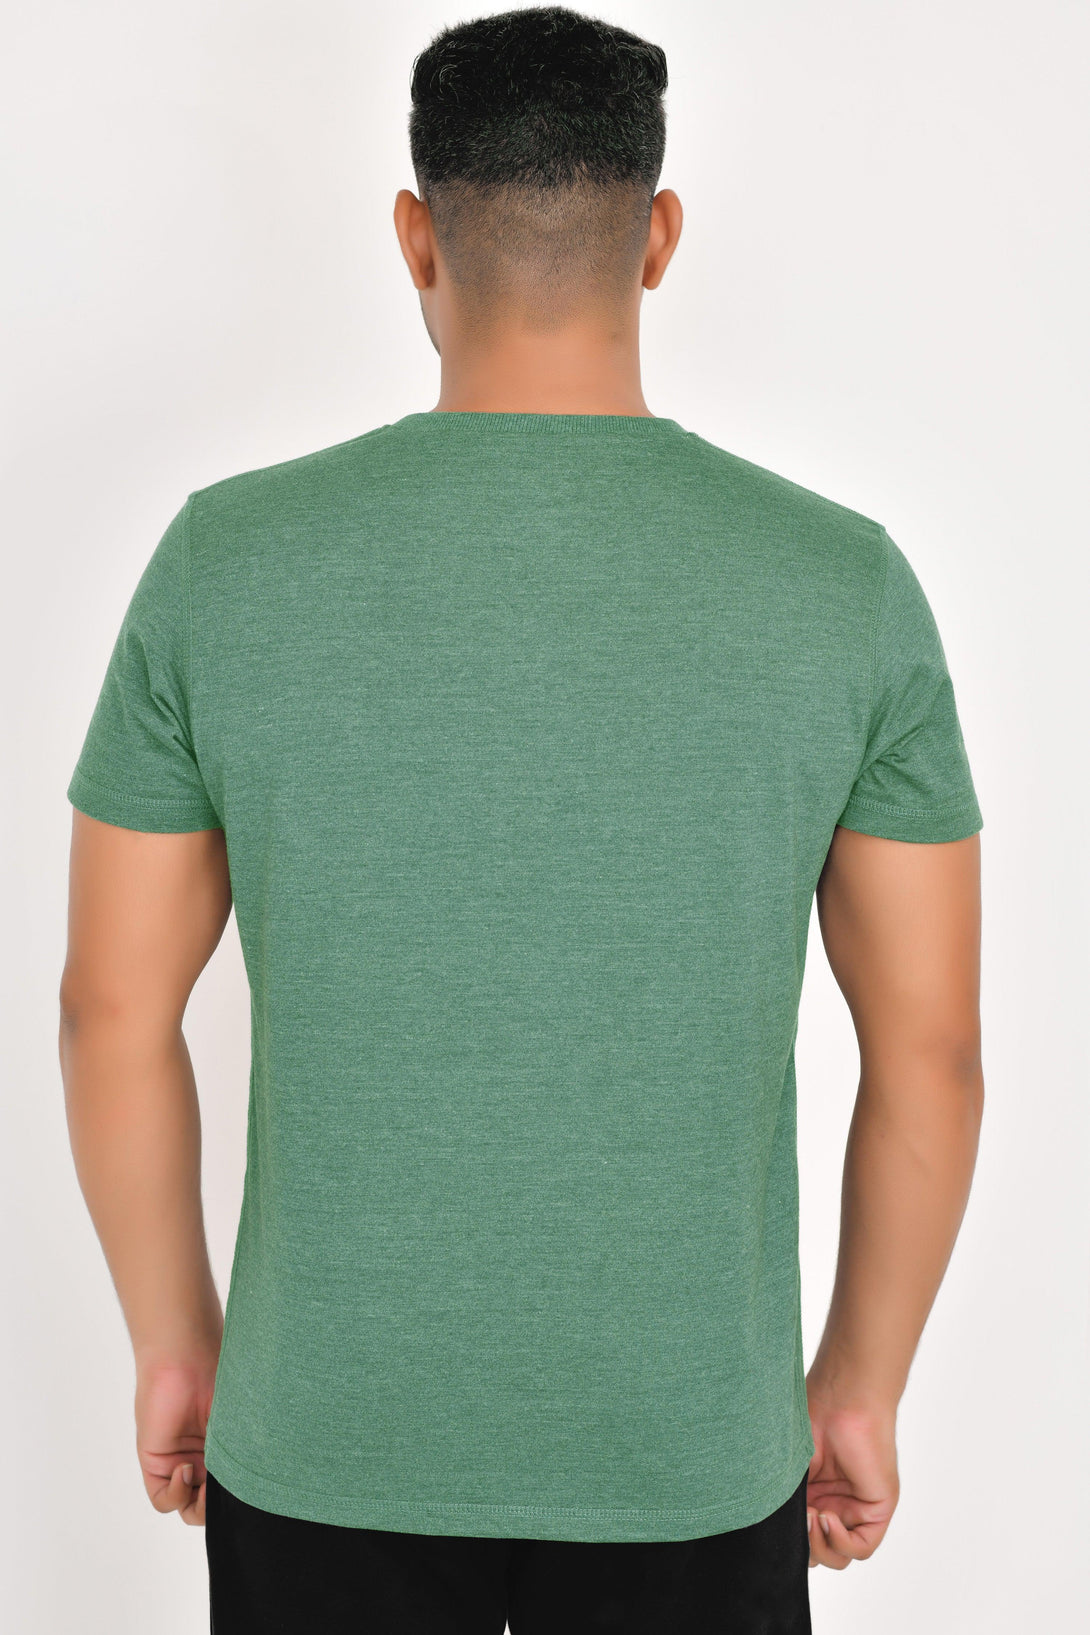 HENLEY T-Shirts | TAN-NAVY MELANGE-HUNTER GREEN - FTS